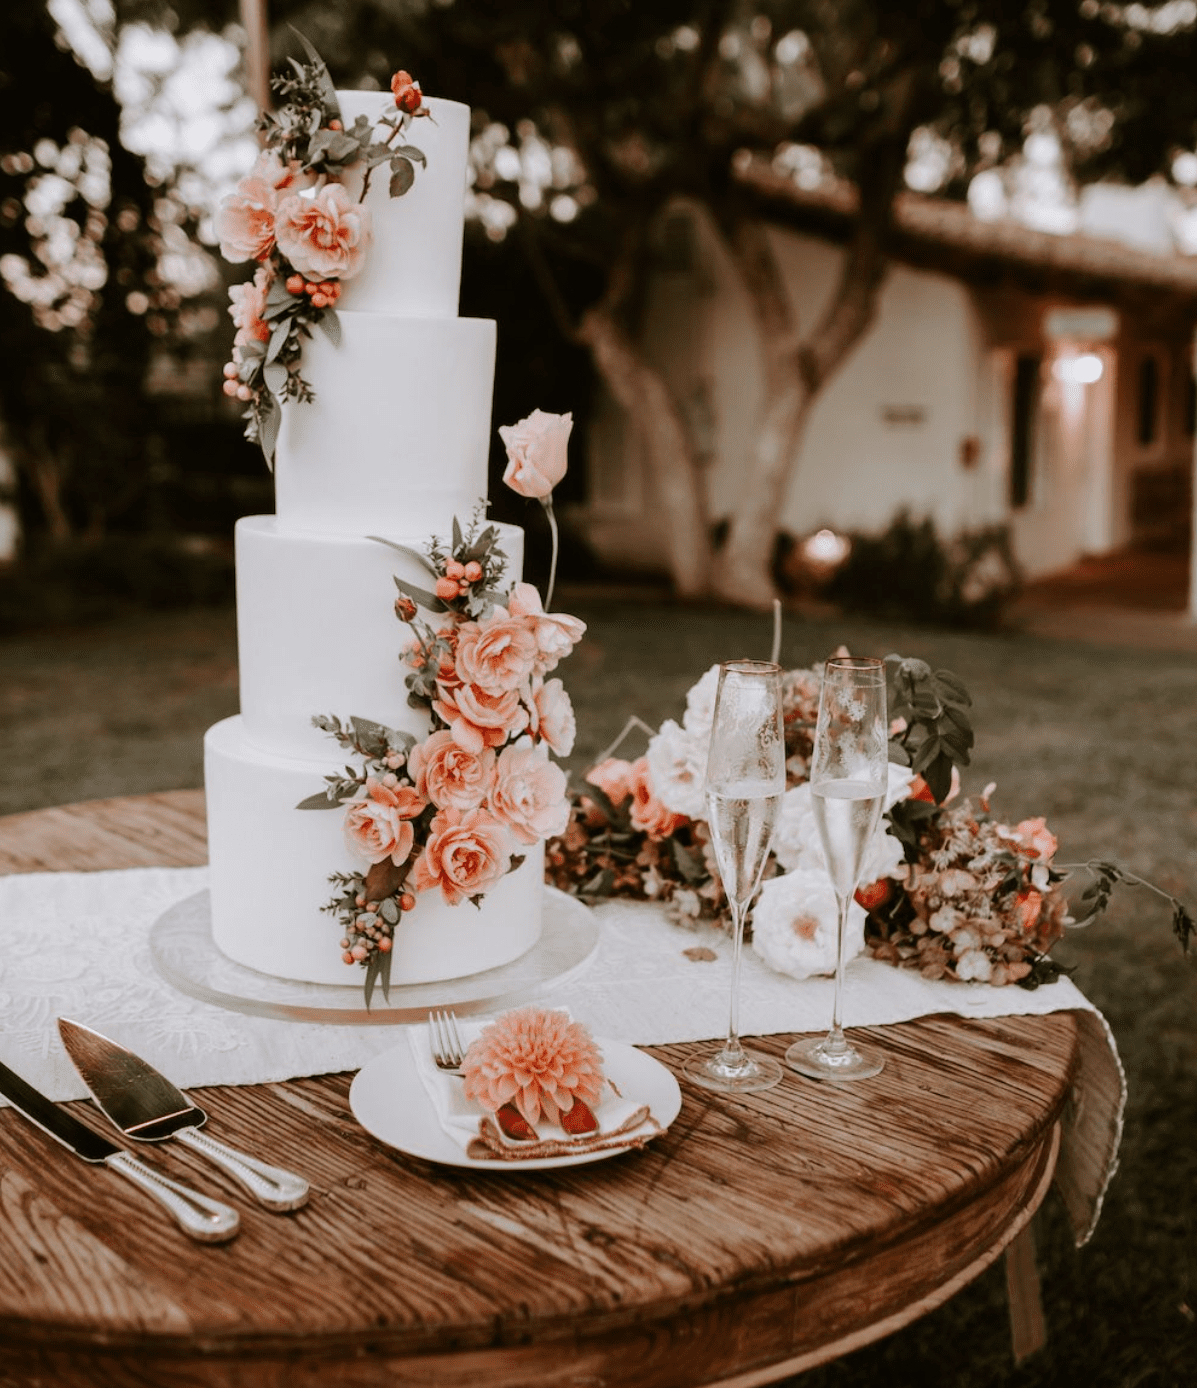 A White Wedding Cake On A Table